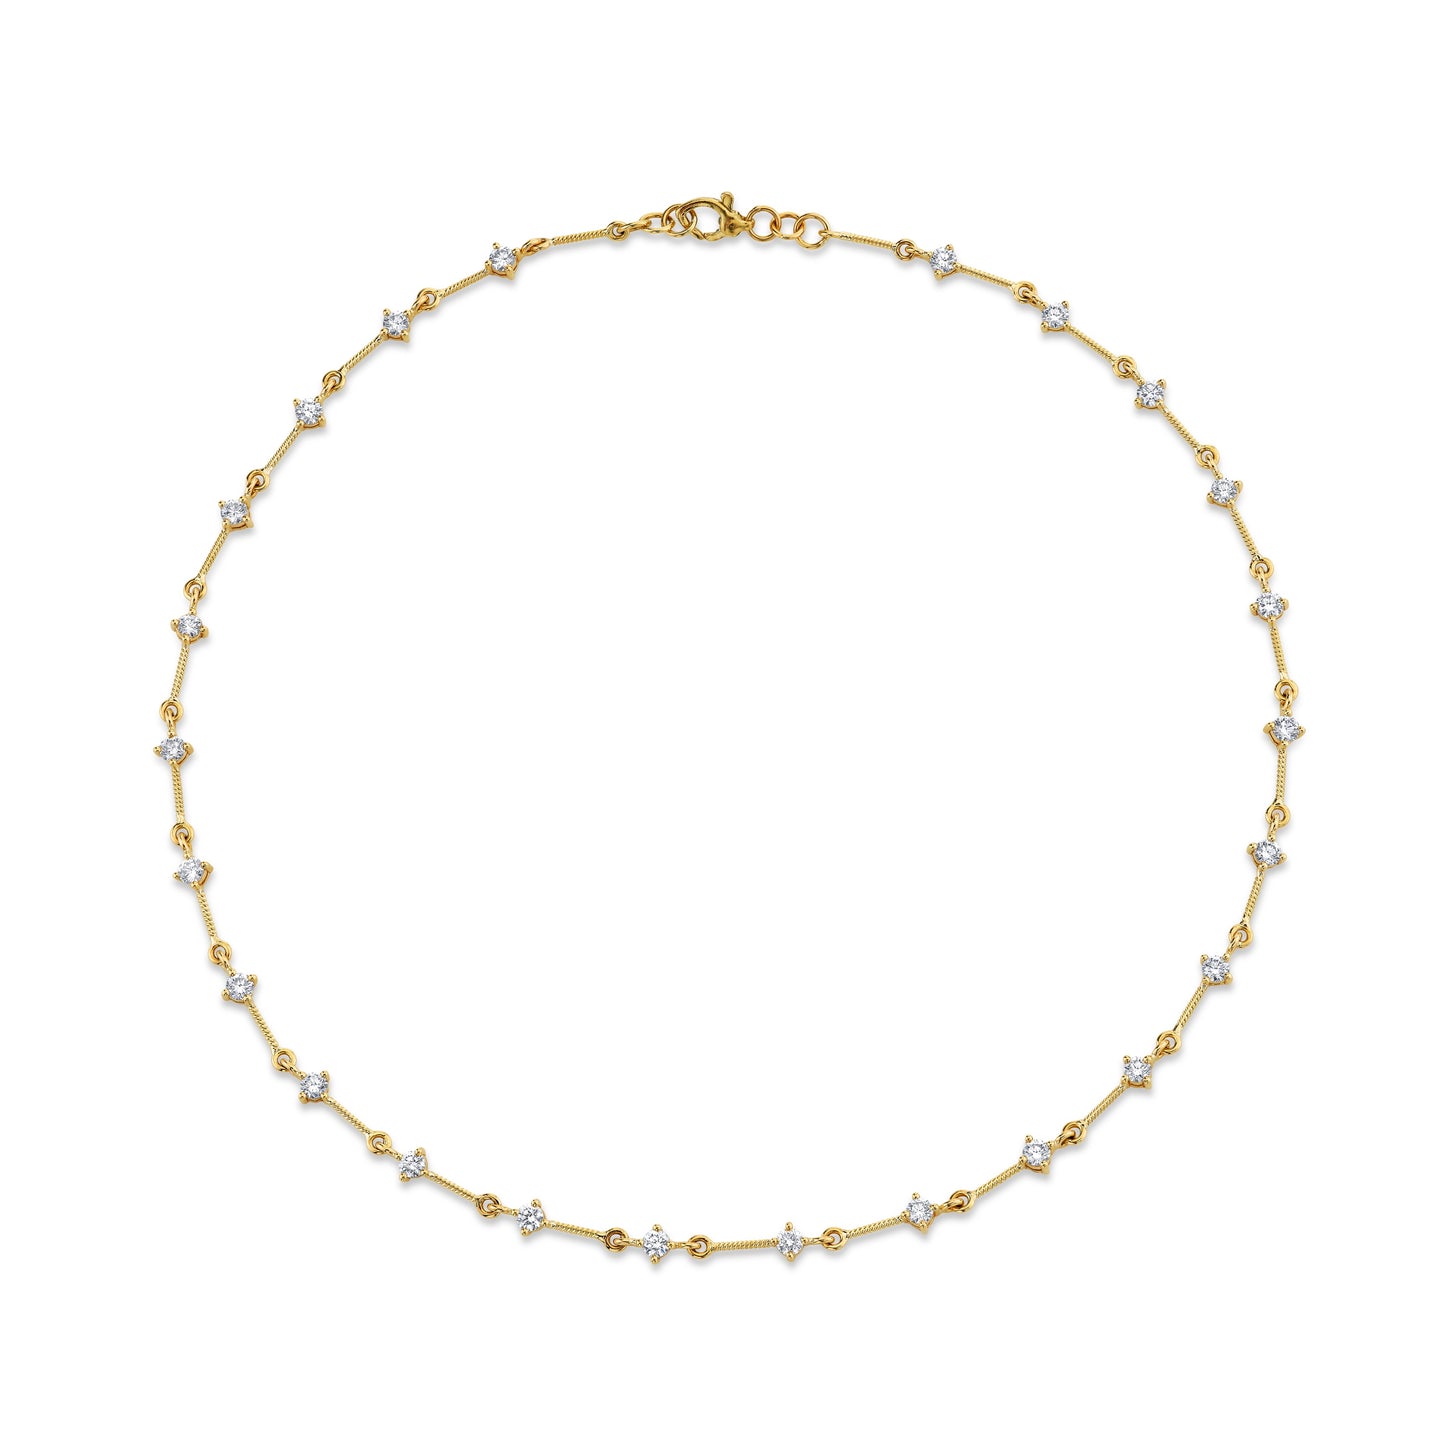 Handmade Twist Chain Diamond Necklace